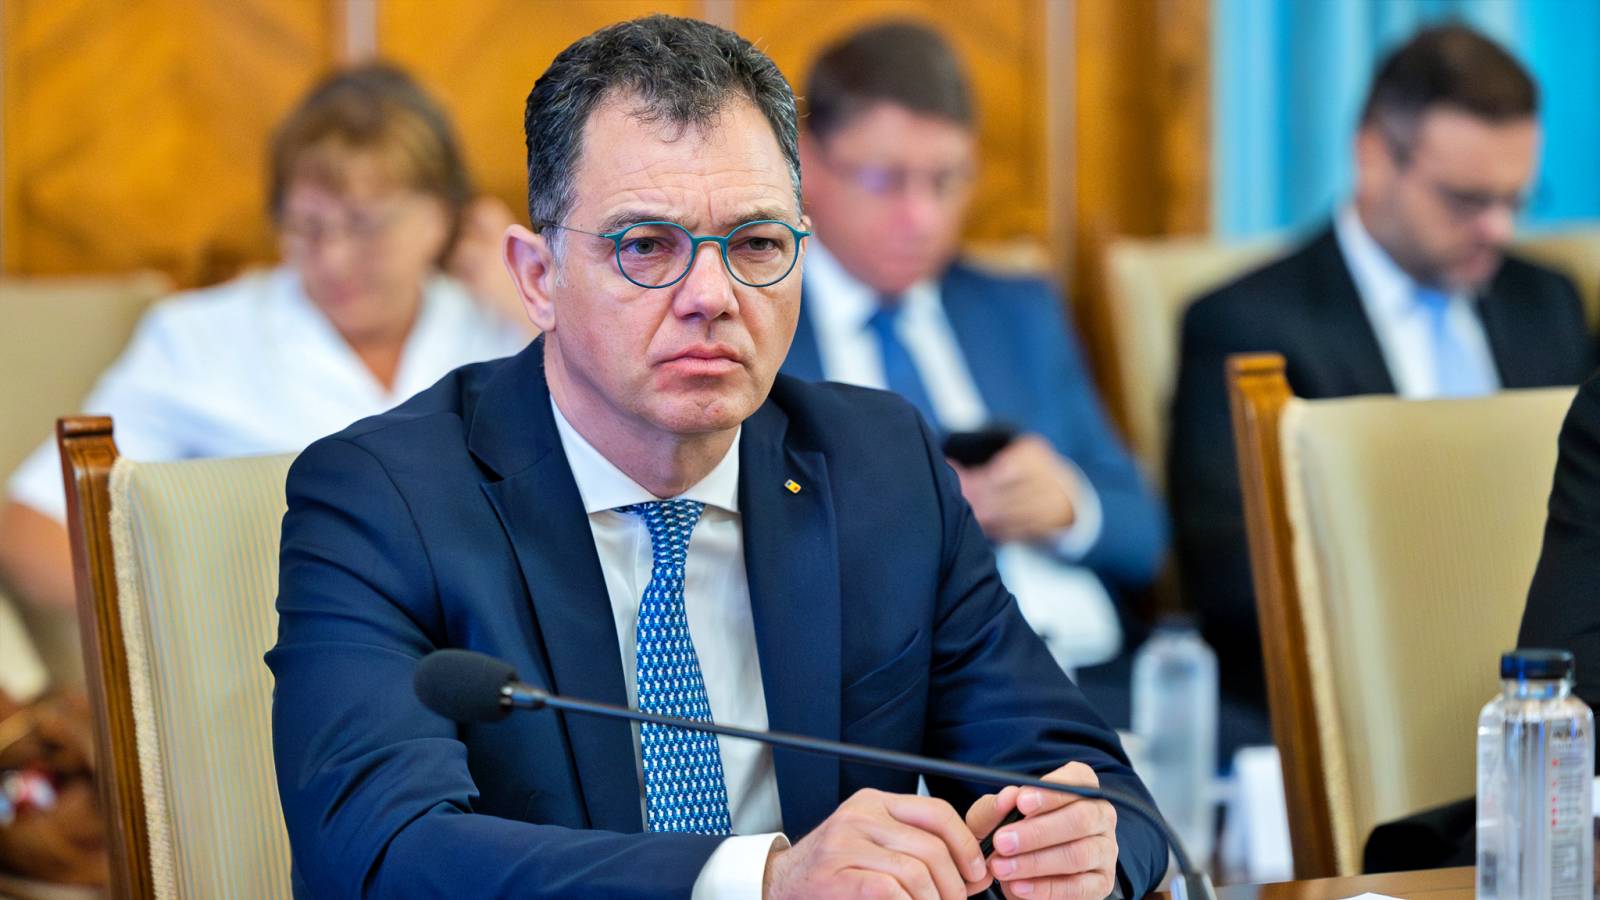 Minister of Economy LAST MOMENT Activities Stefan-Radu Oprea Romania